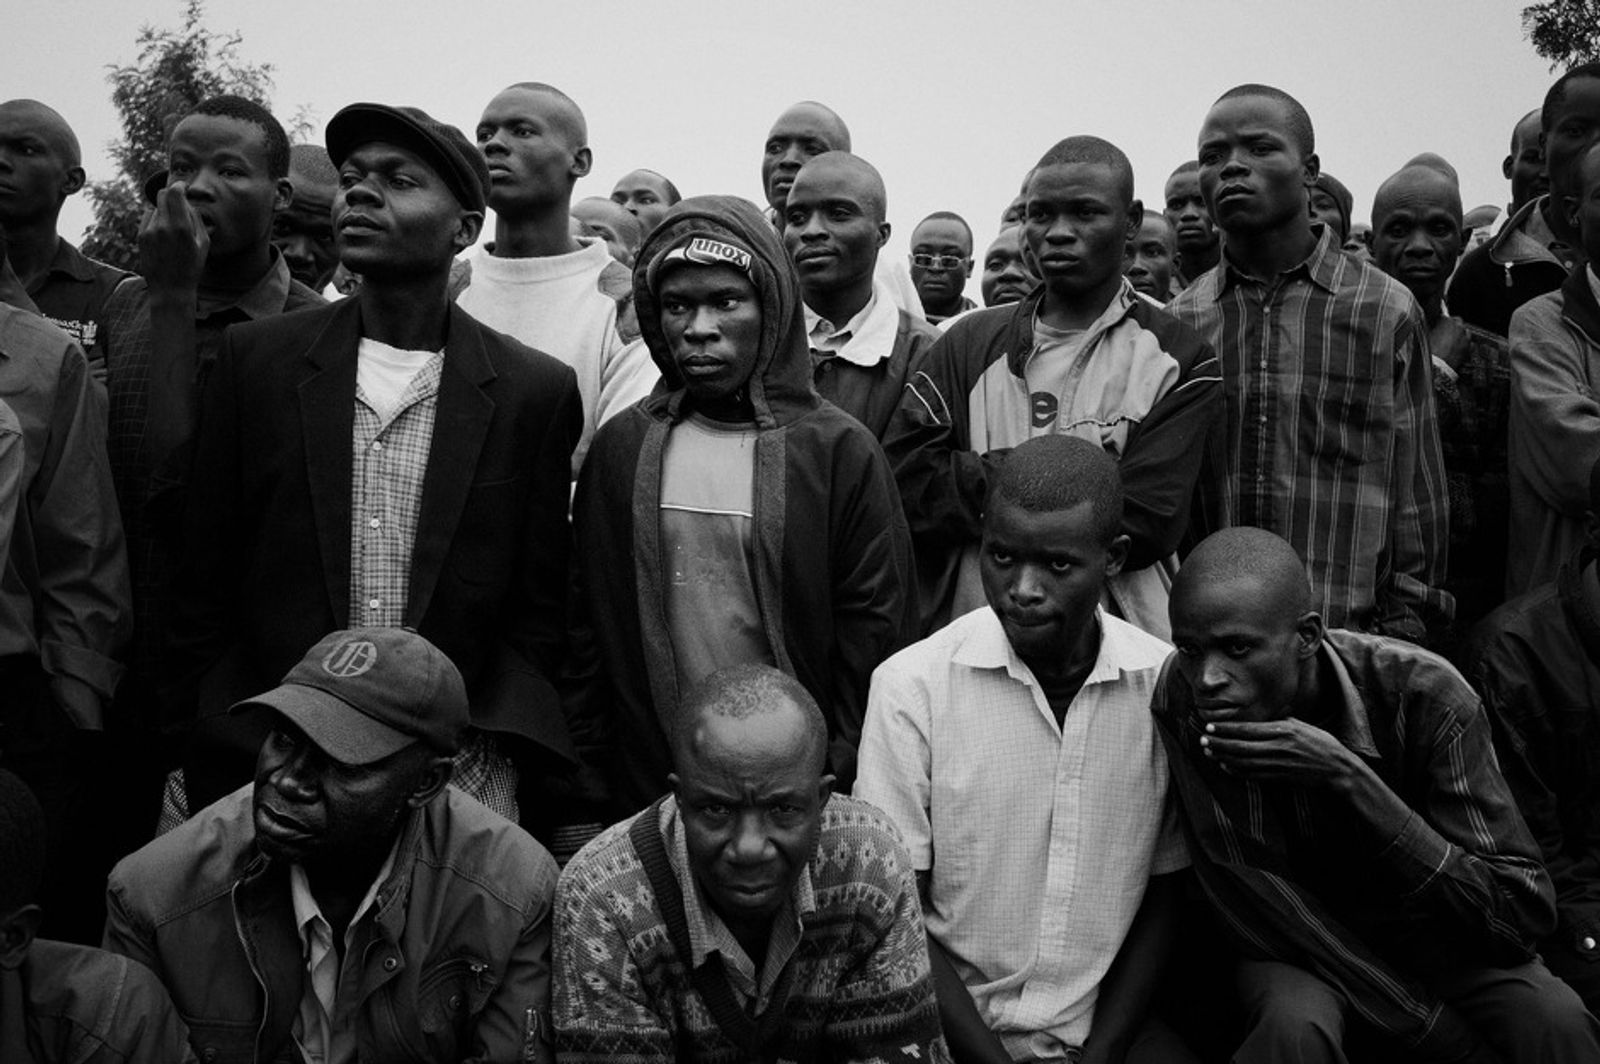 © Bob Miller - A crowd of Luo youth gather to listen to an address at a Kamkunji gathering in Kisumu Ndogo village in Kibera Slum, Nairobi.